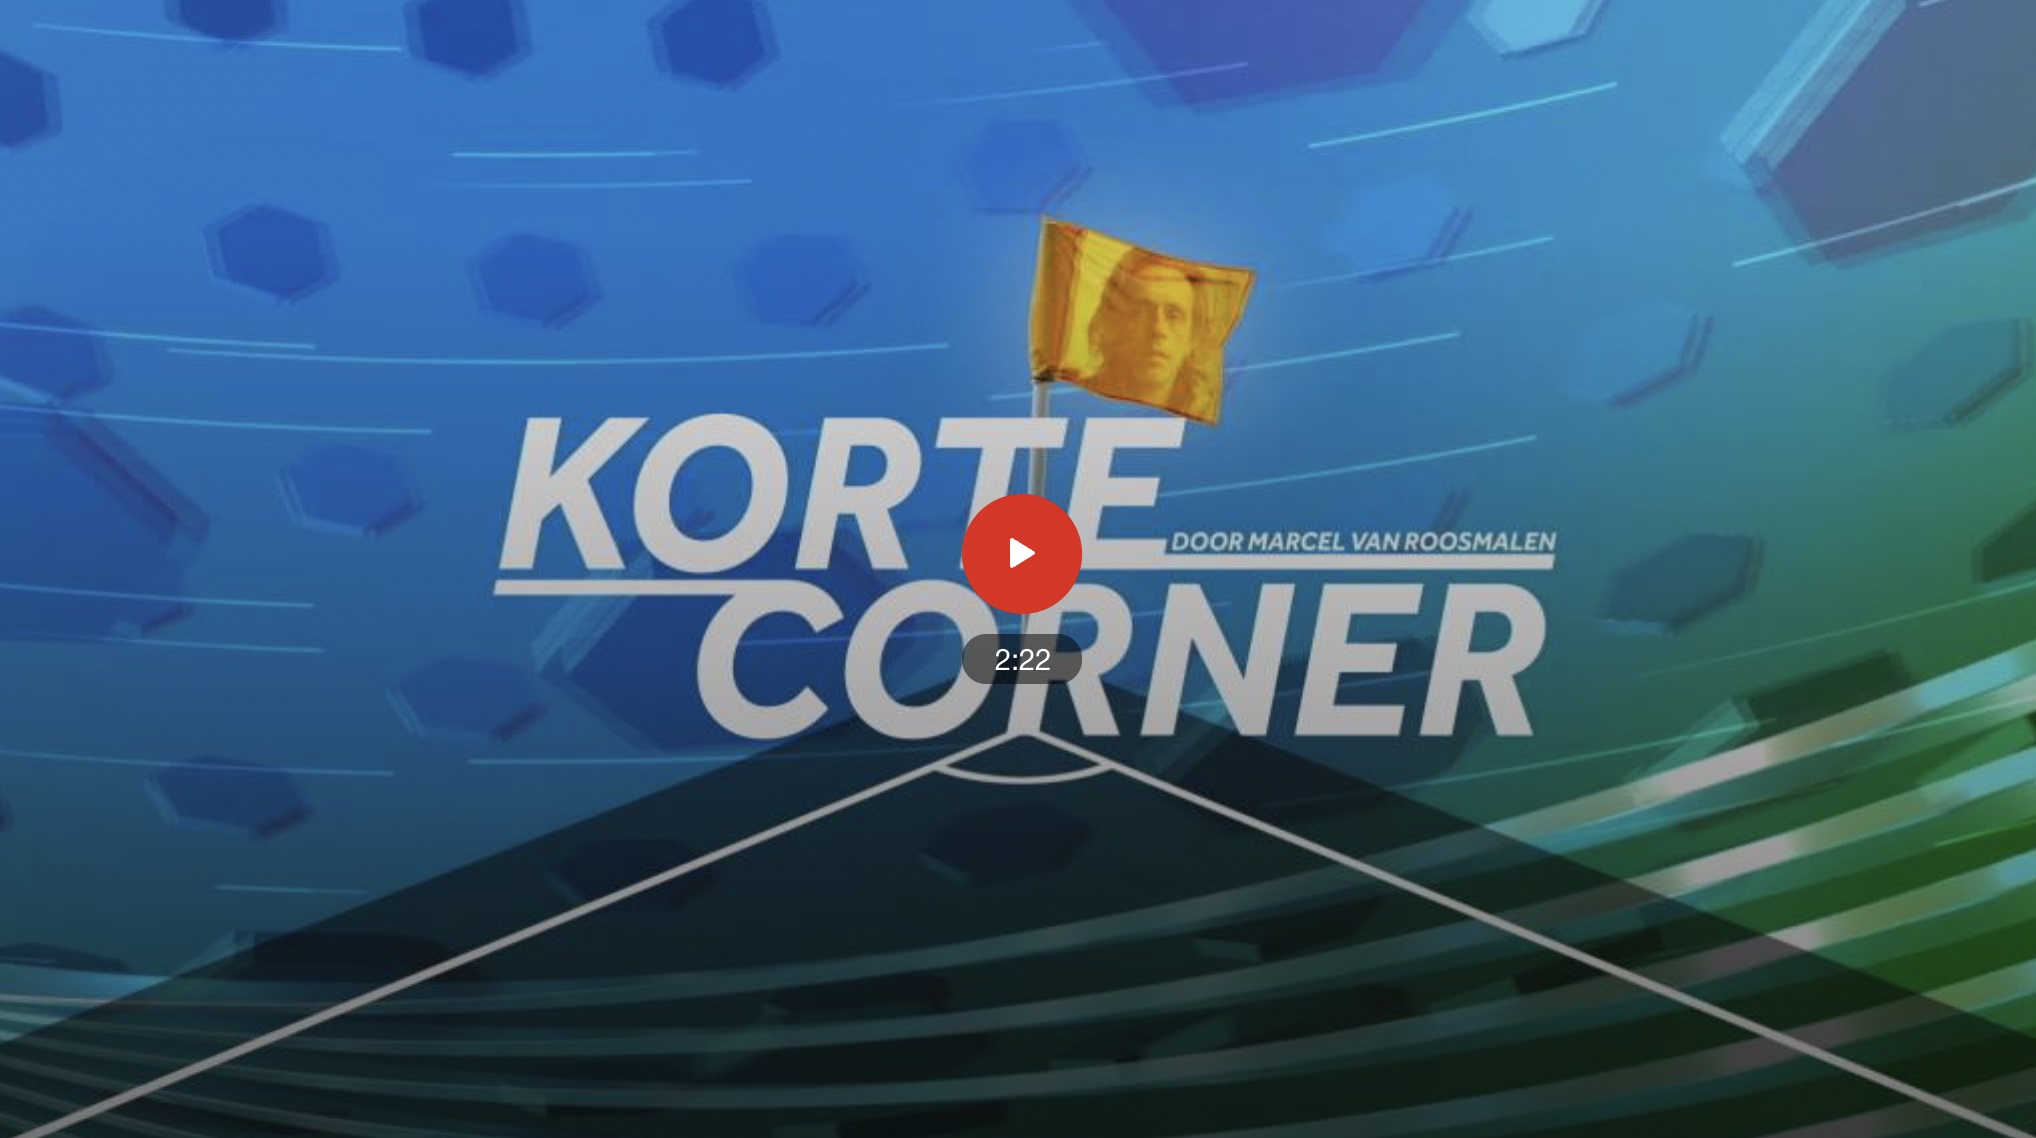 https://nos.nl/video/2410212-korte-corner-floki-een-echte-fc-twente-munt